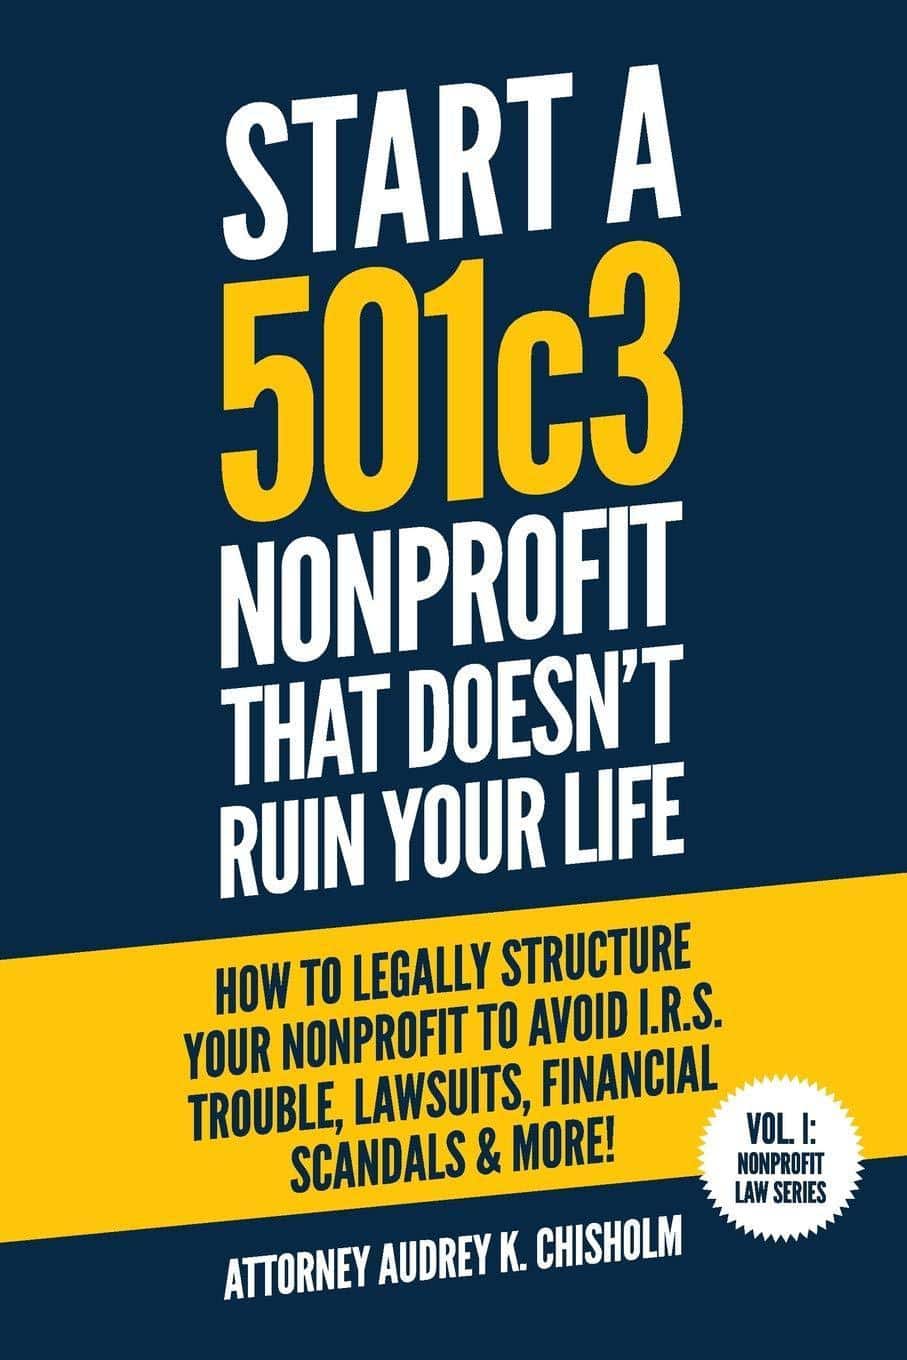 Start A 501c3 Nonprofit That Doesn’t Ruin Your Life - SureShot Books Publishing LLC